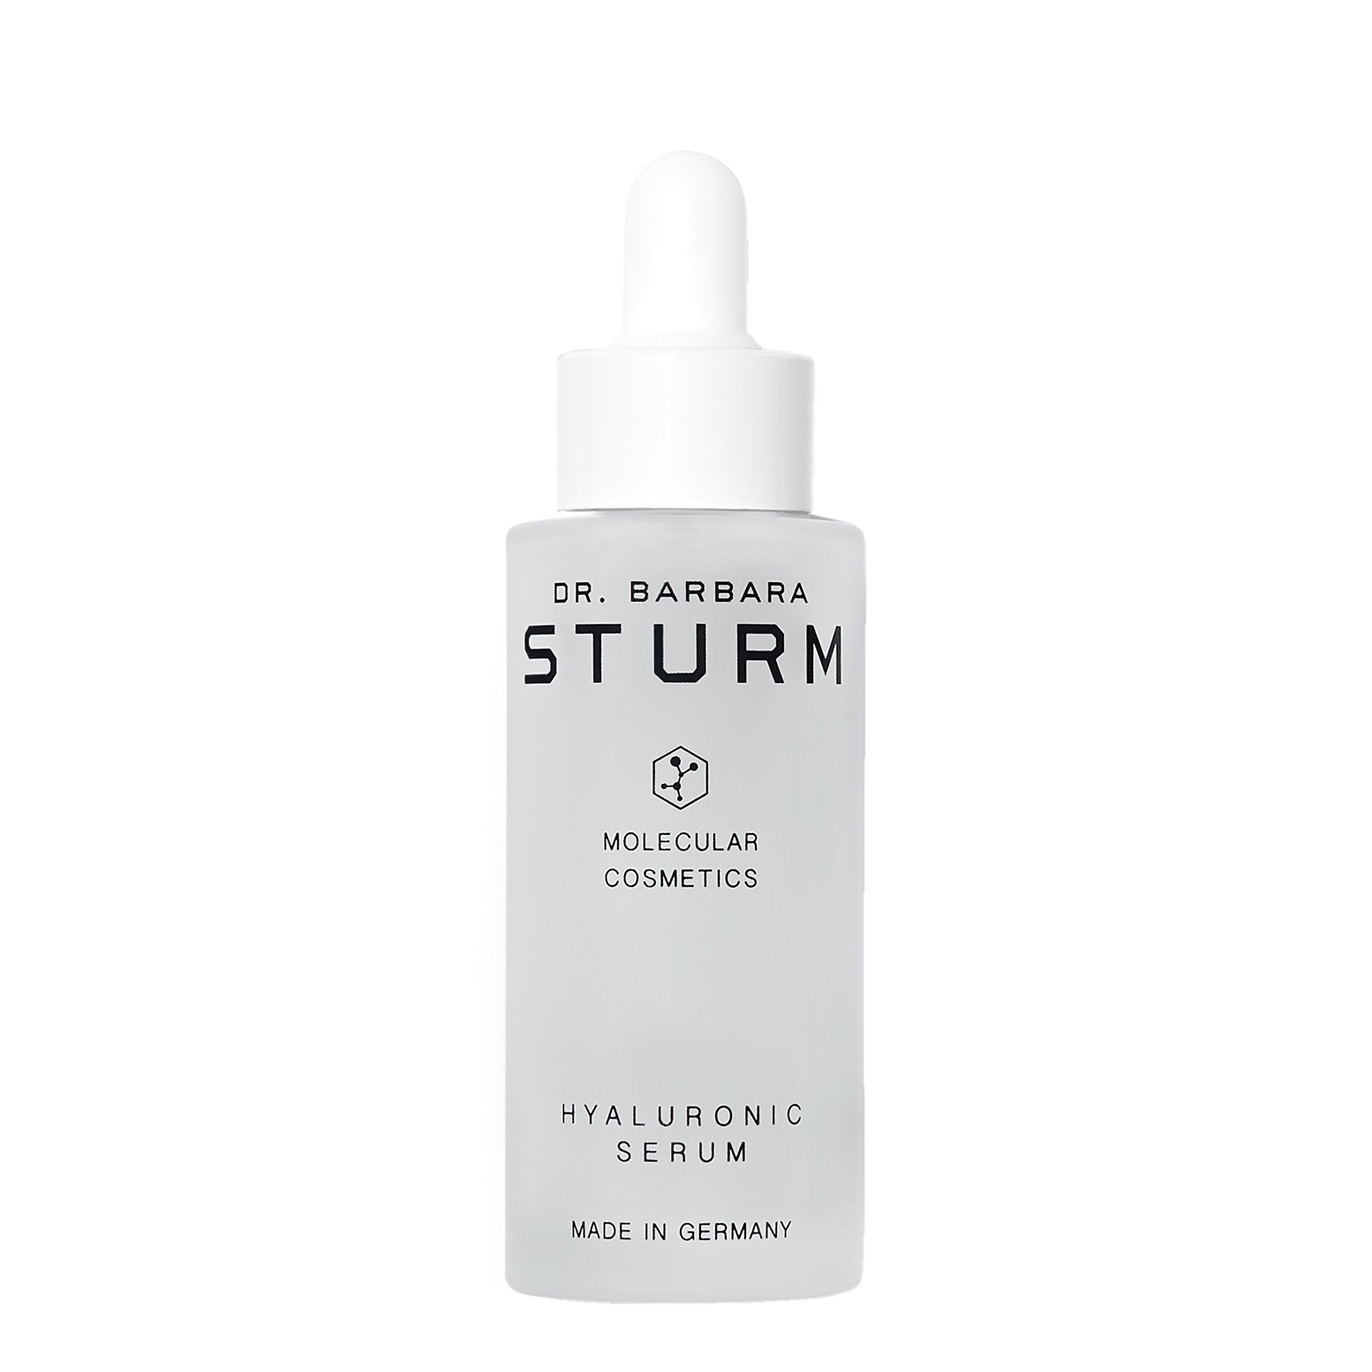 DR Barbara Sturm Hyaluronic Serum 30ml, Skincare, Hyaluronic Acid